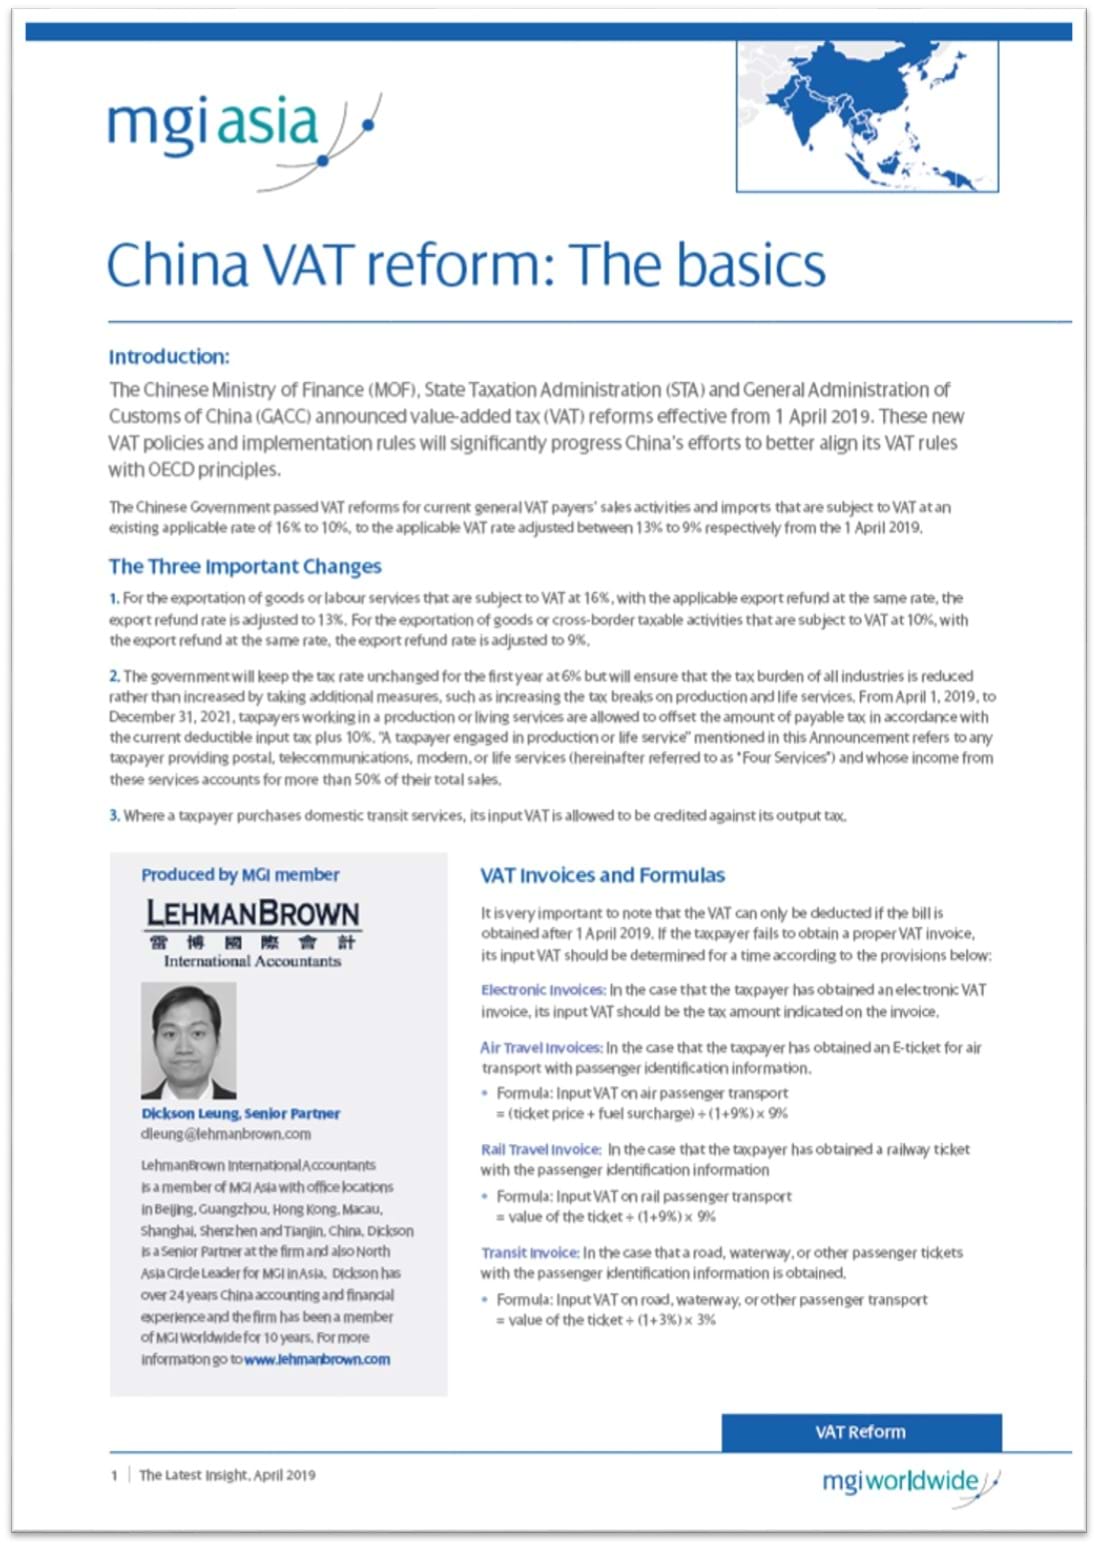 mgi-asia-paper_china-vat-reform_screenshot.jpg